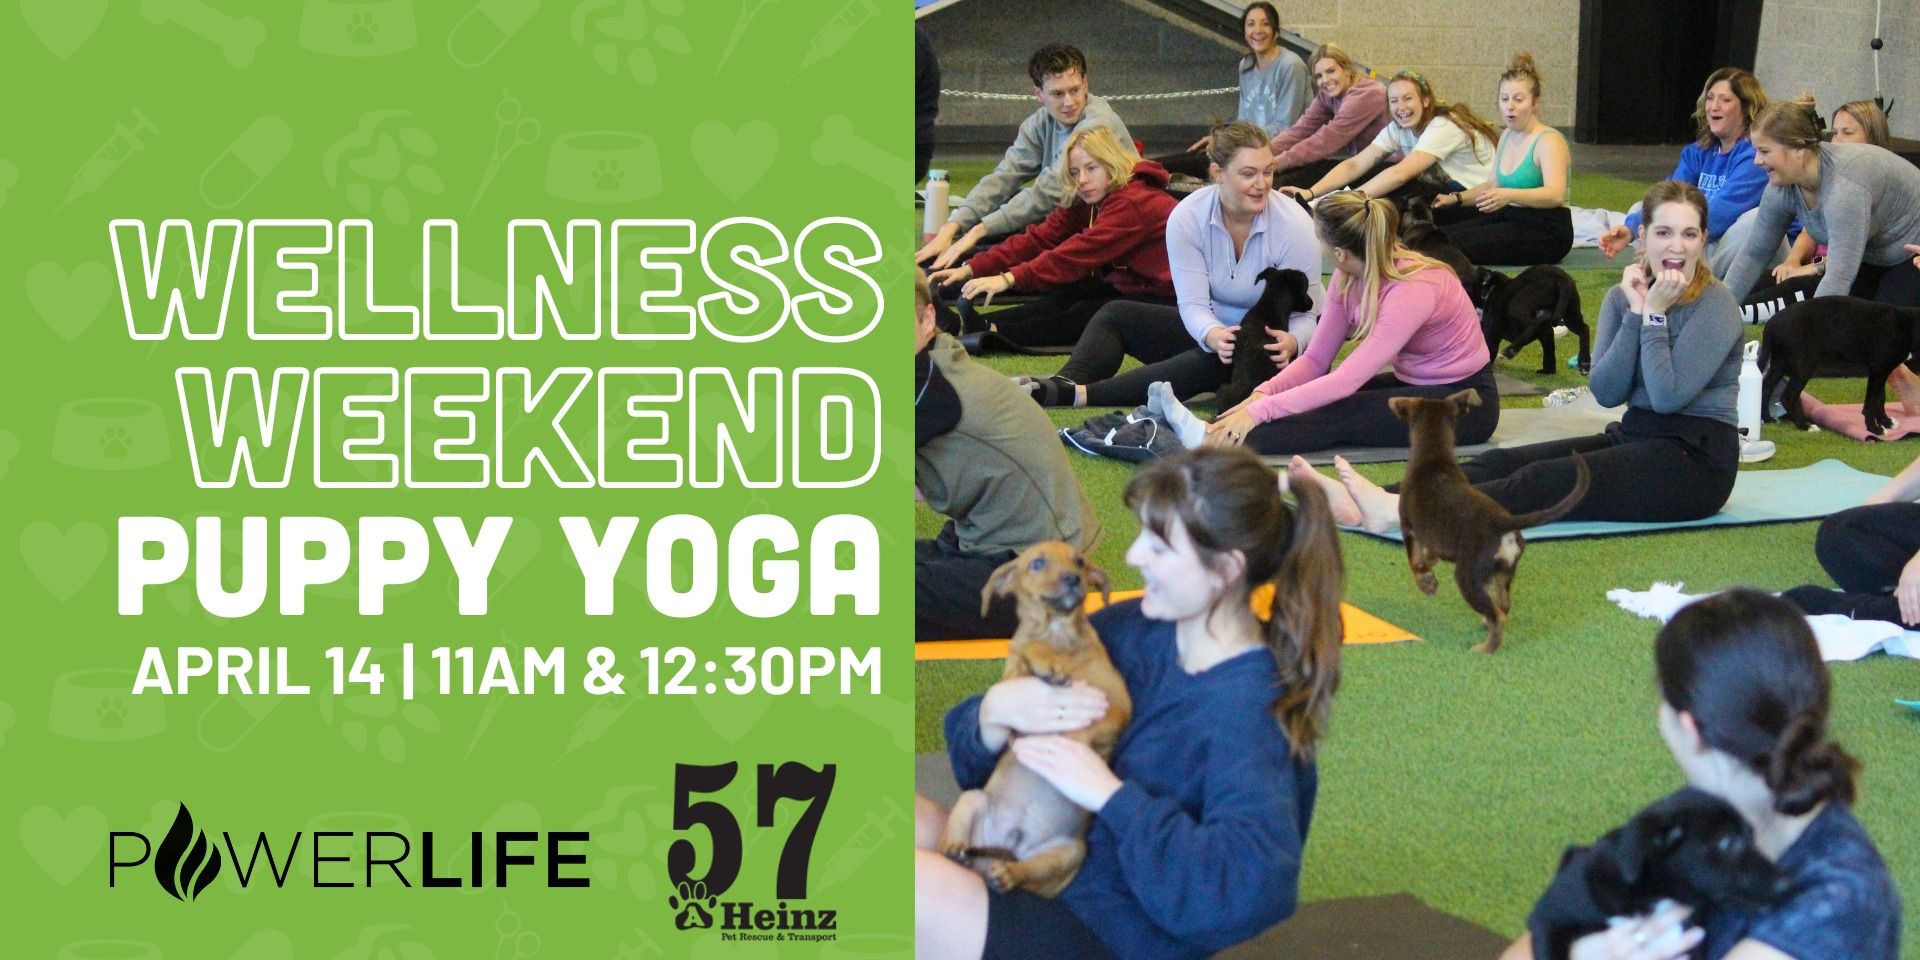 Wellness Weekend Puppy Yoga promotional image